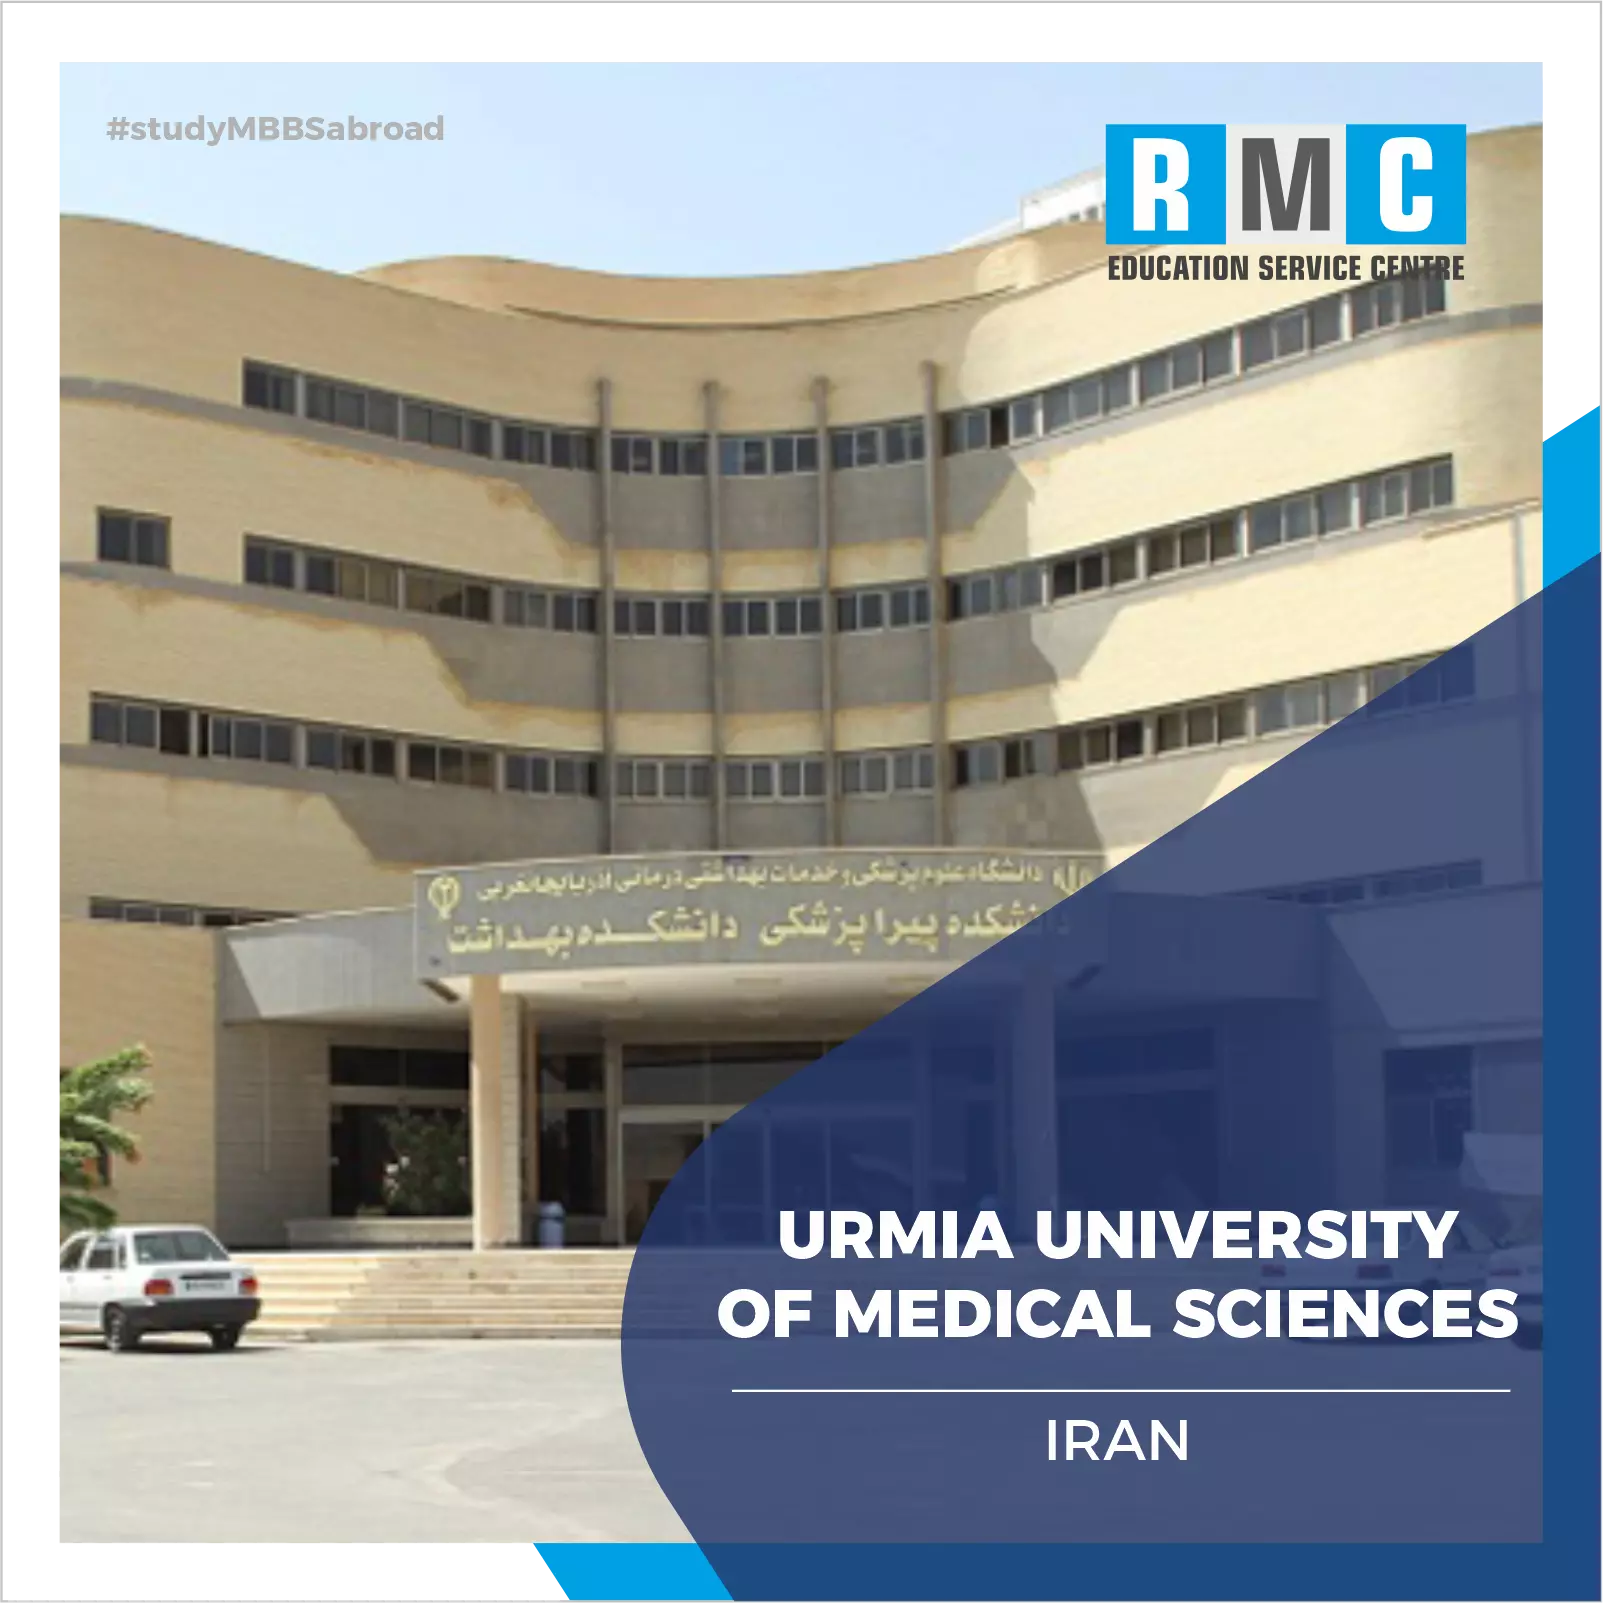 Urmia University of Medical Sciences